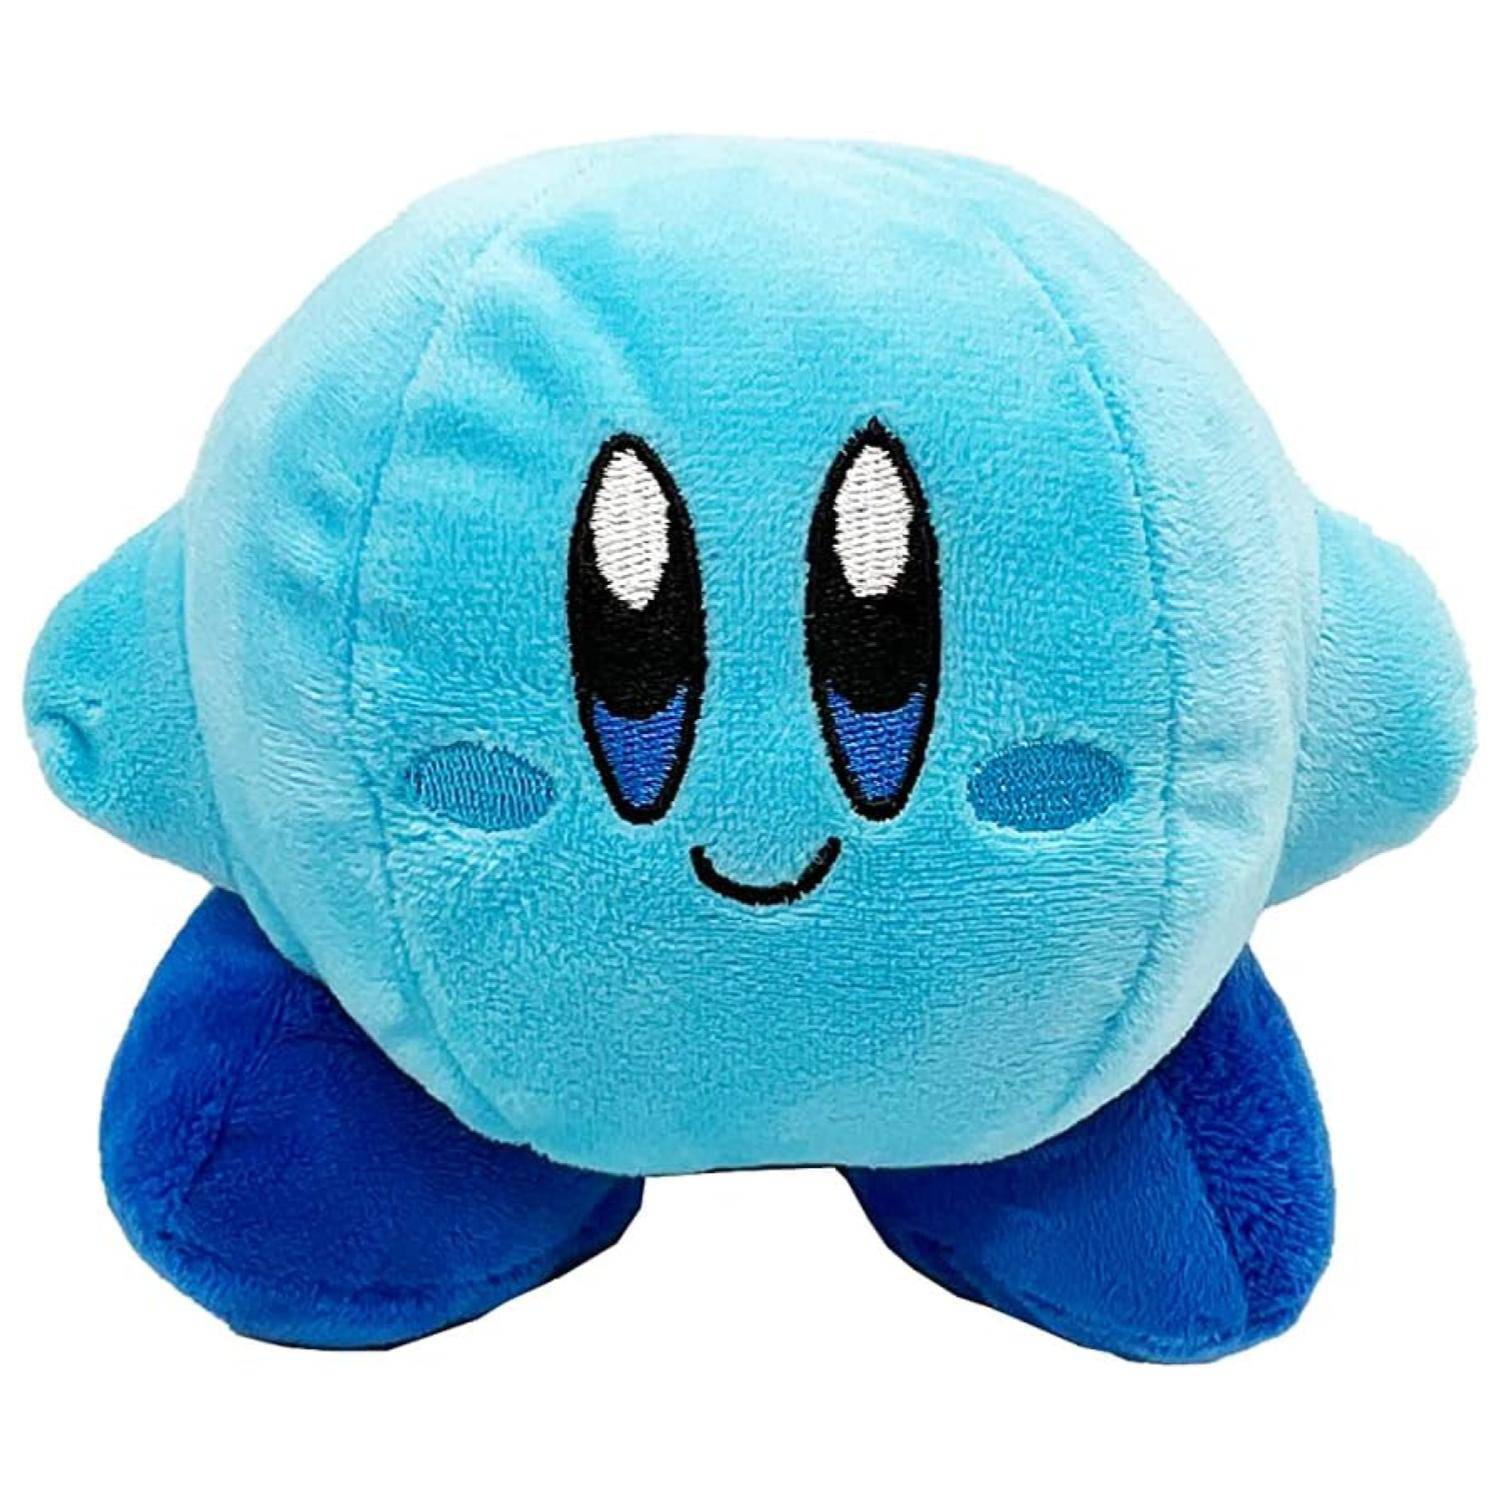 Vintage Banpresto Kirby peluche personaje suave juguete Nintendo